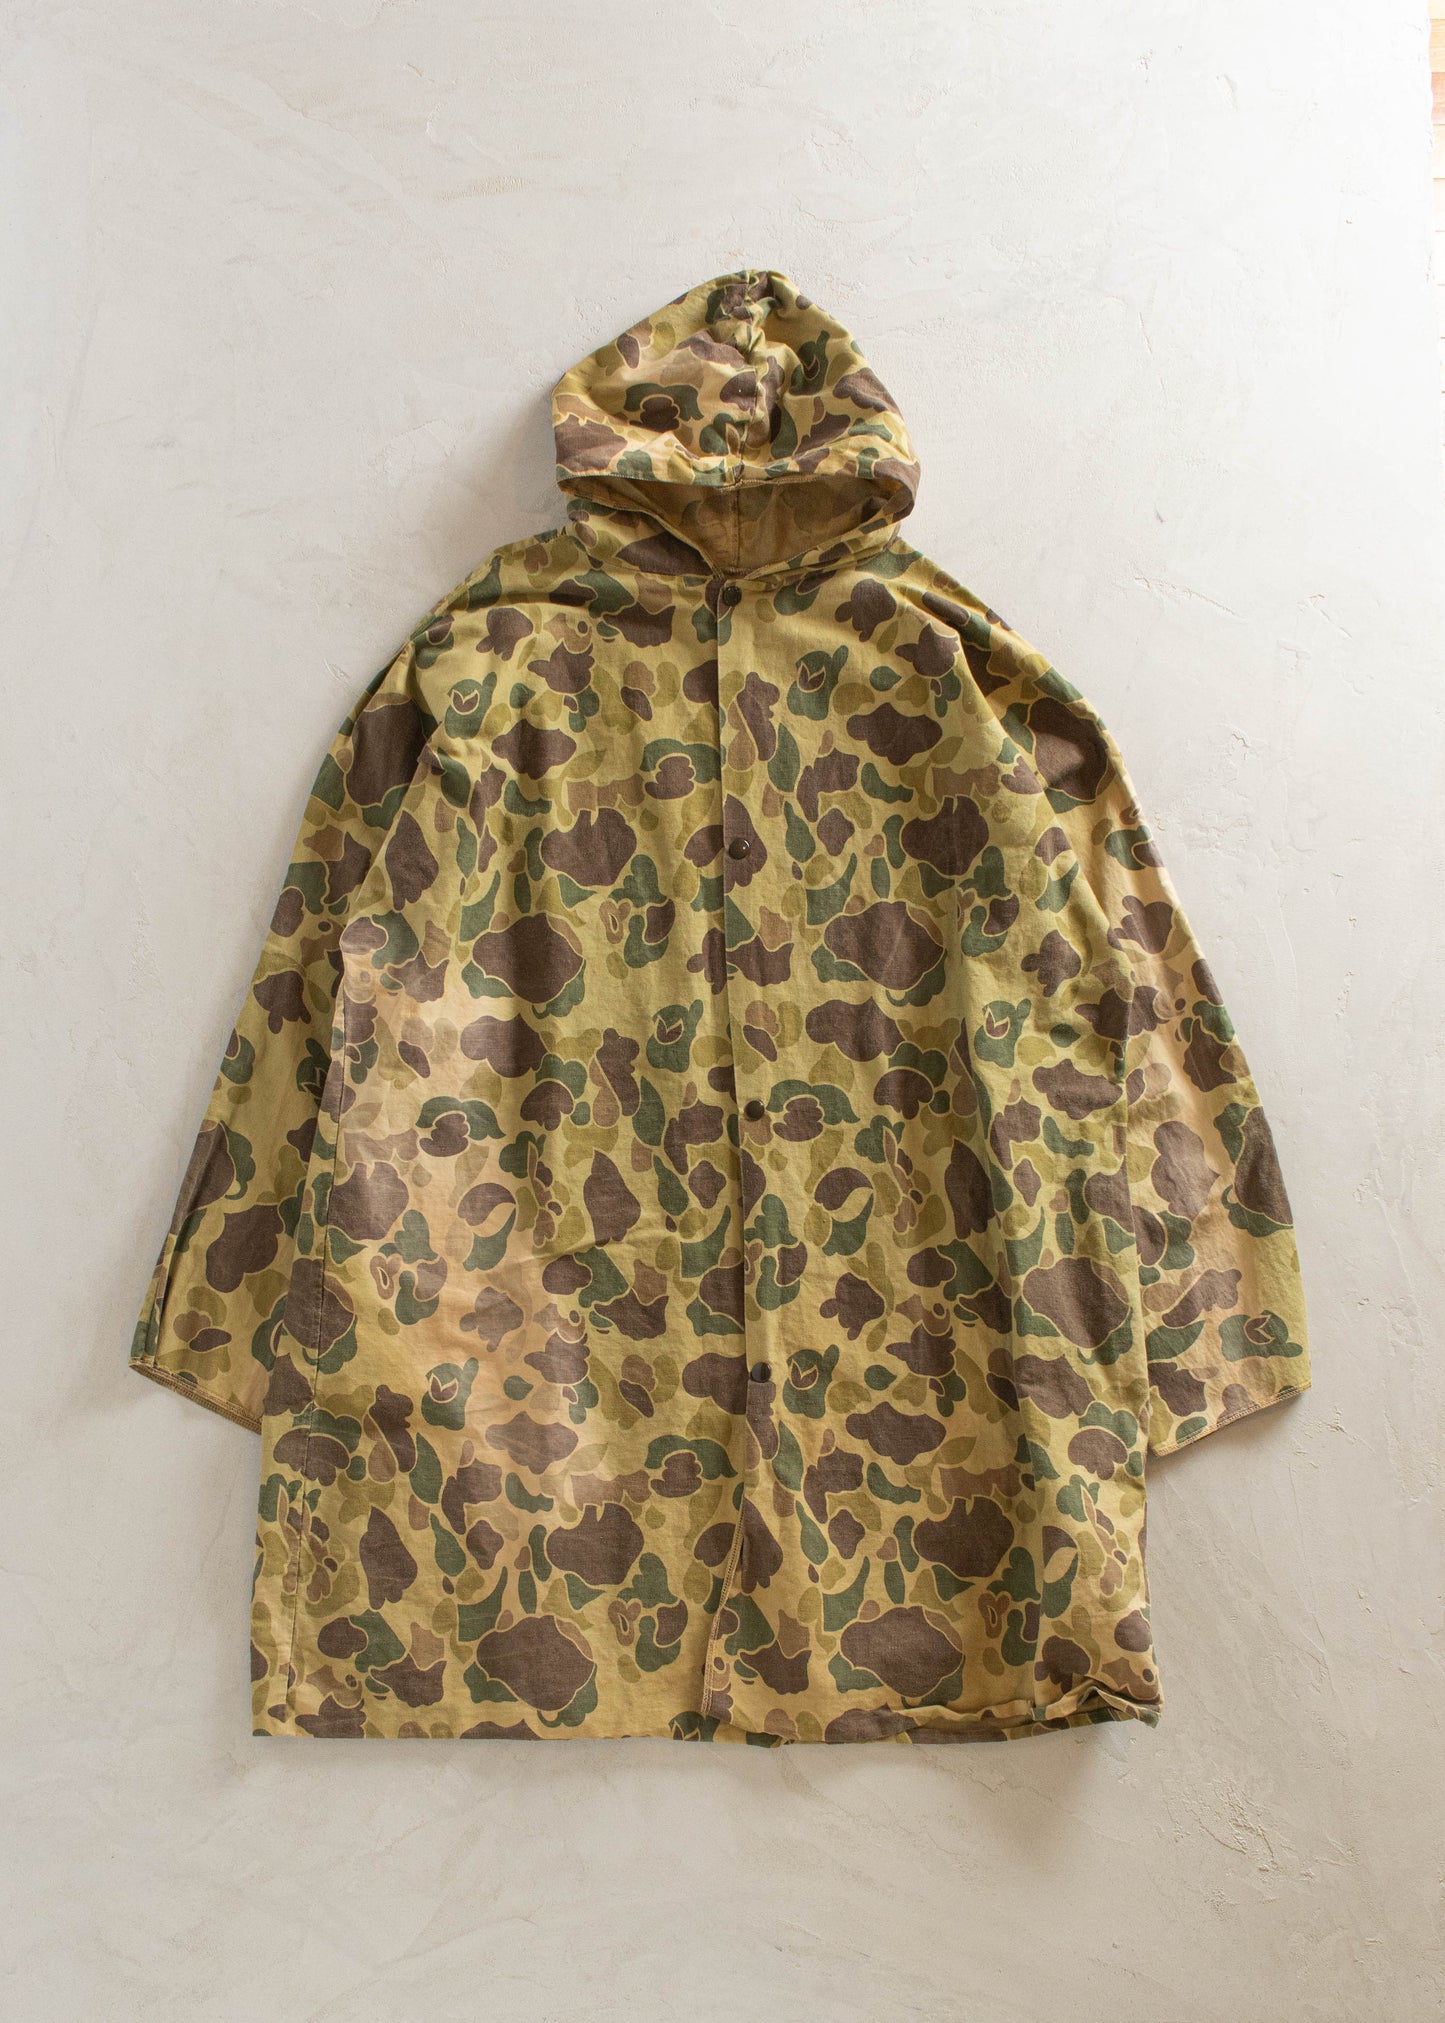 1980s Frog Camo Hooded Jacket Size XL/2XL